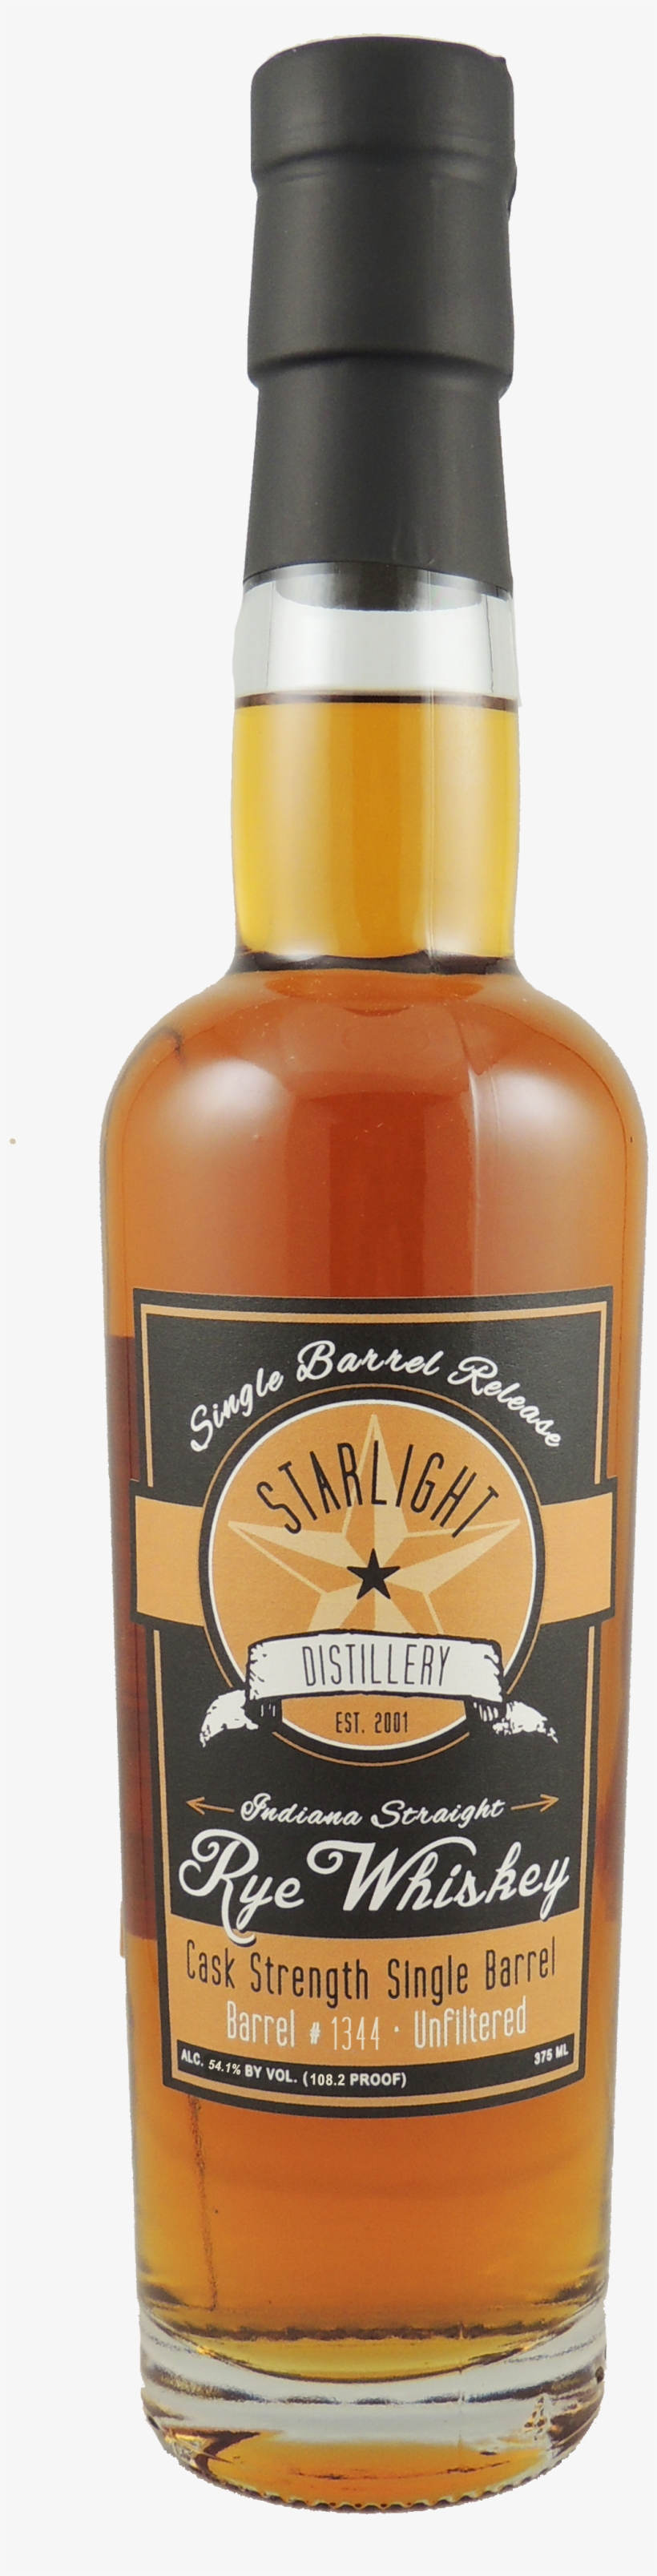 Single Barrel Rye Whiskey, transparent png #1793502